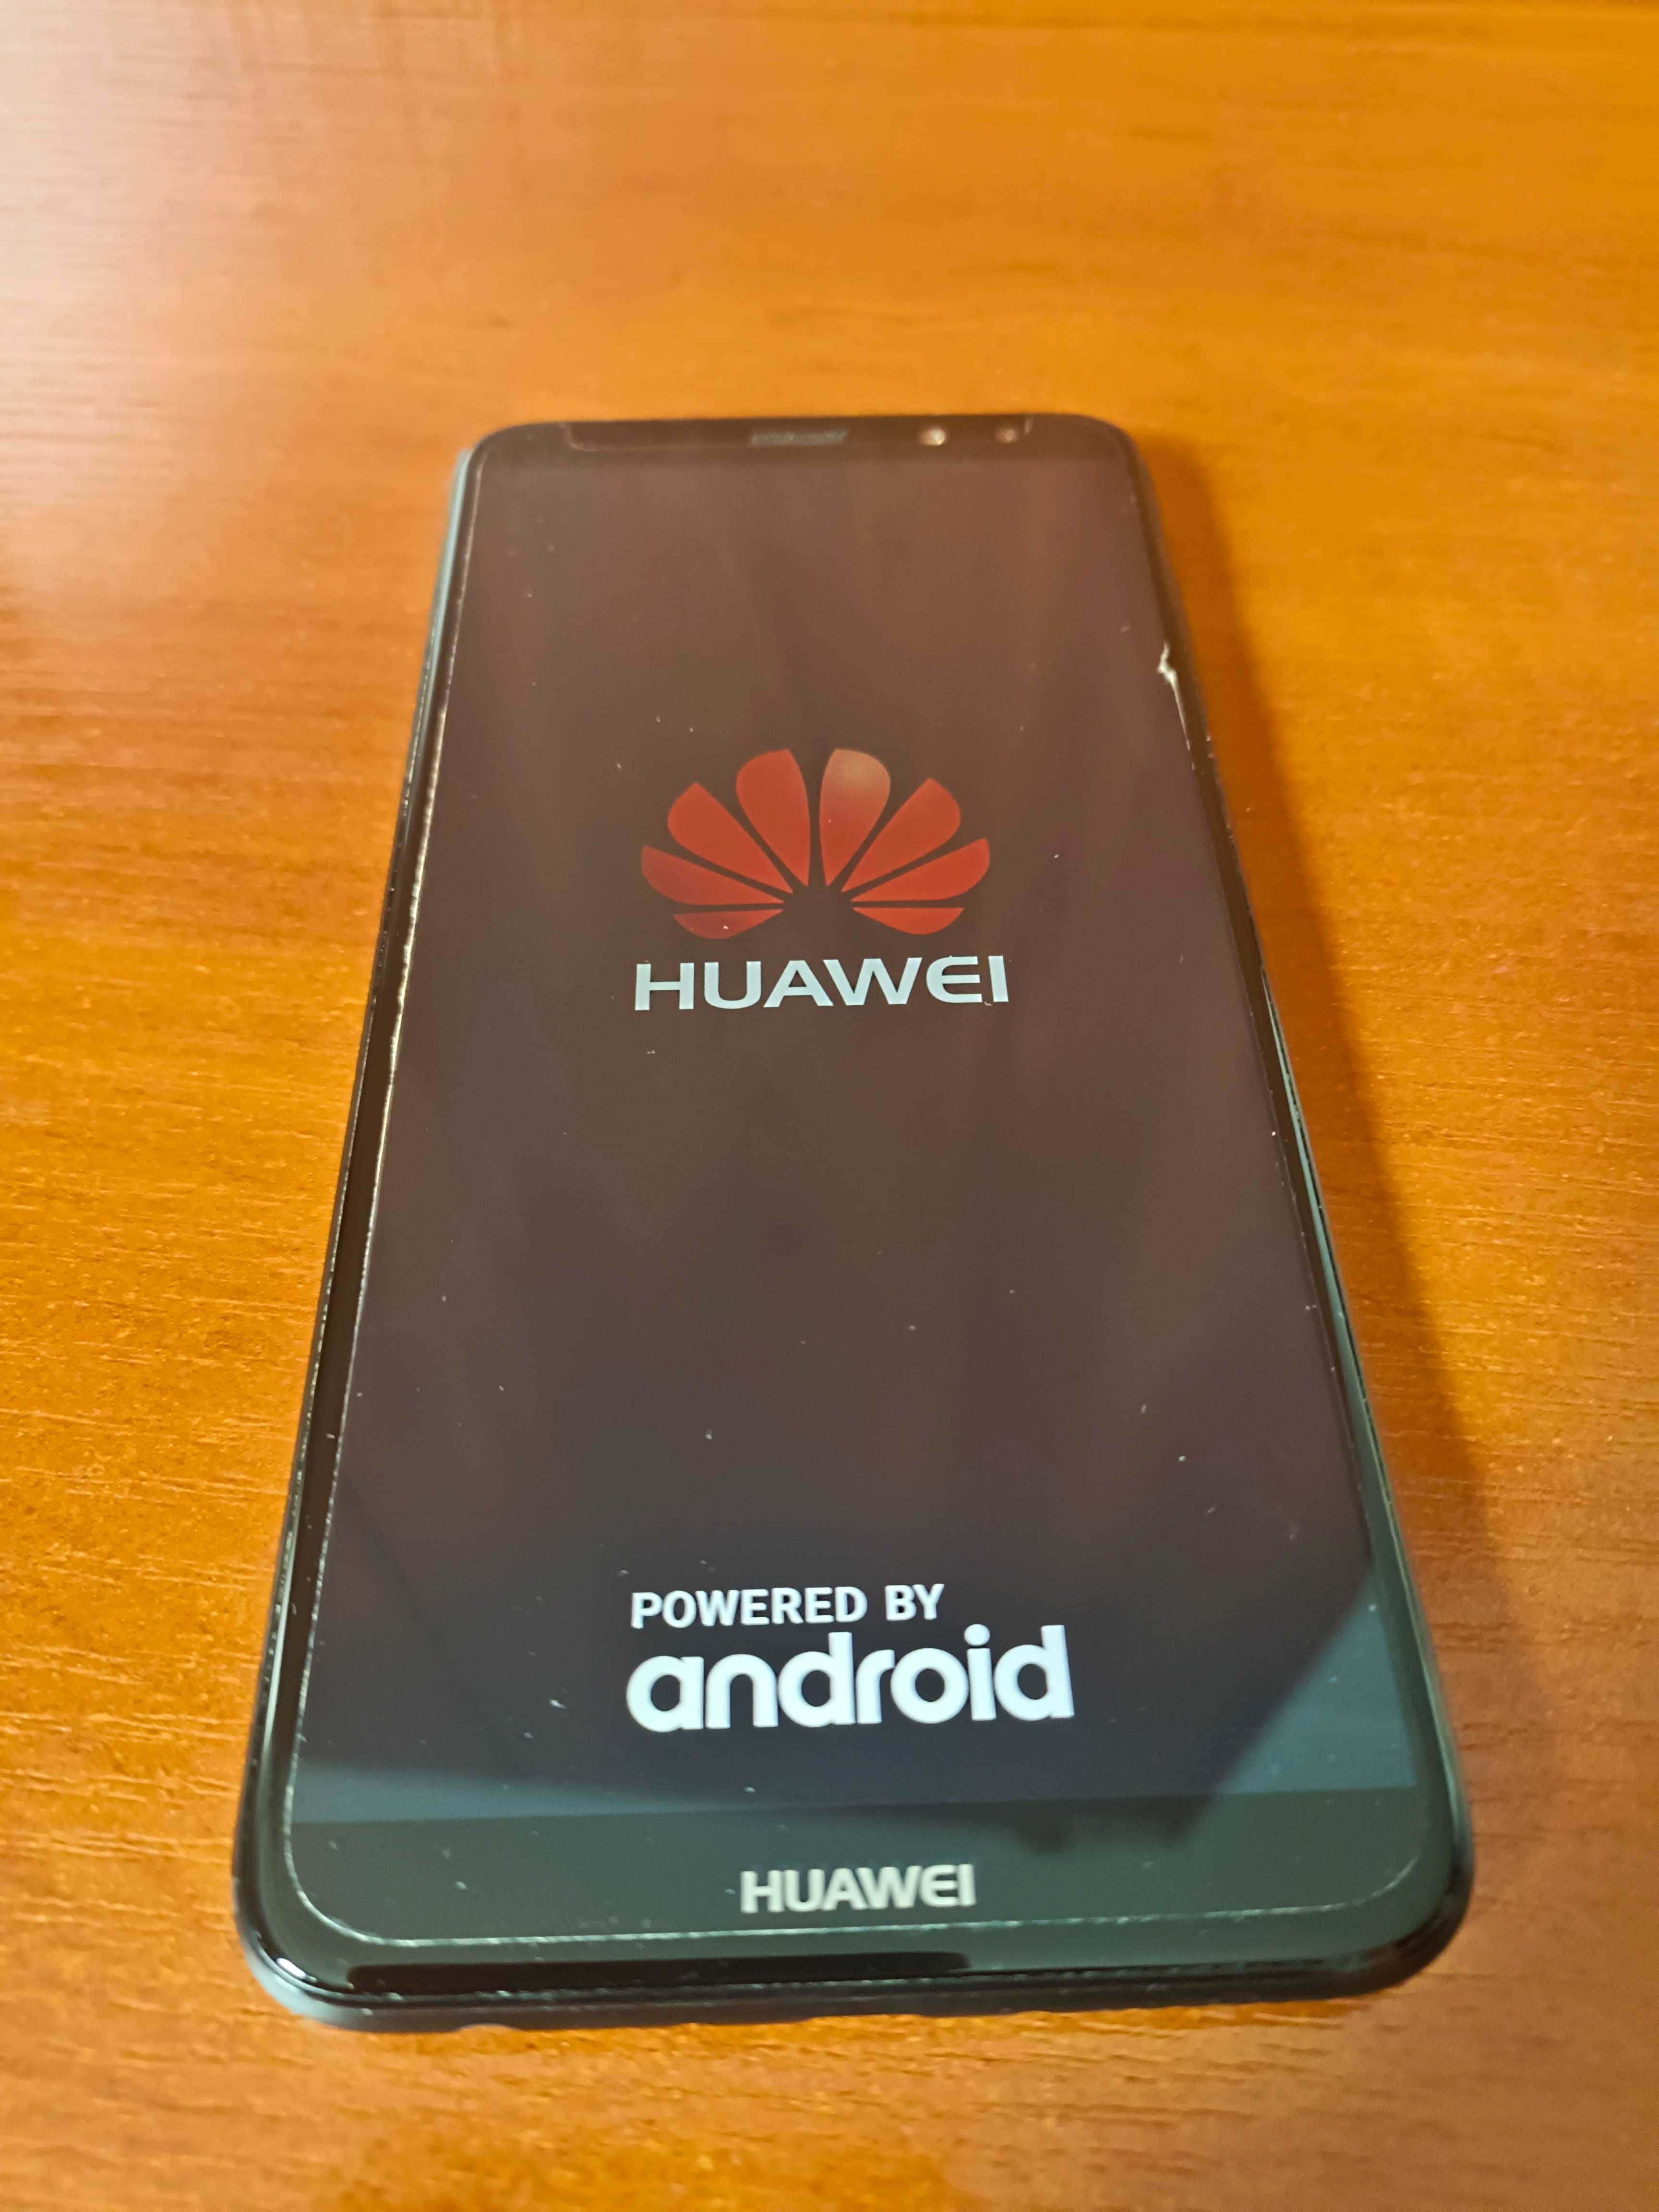 Huawei Mate 10 lite - RNE-L21